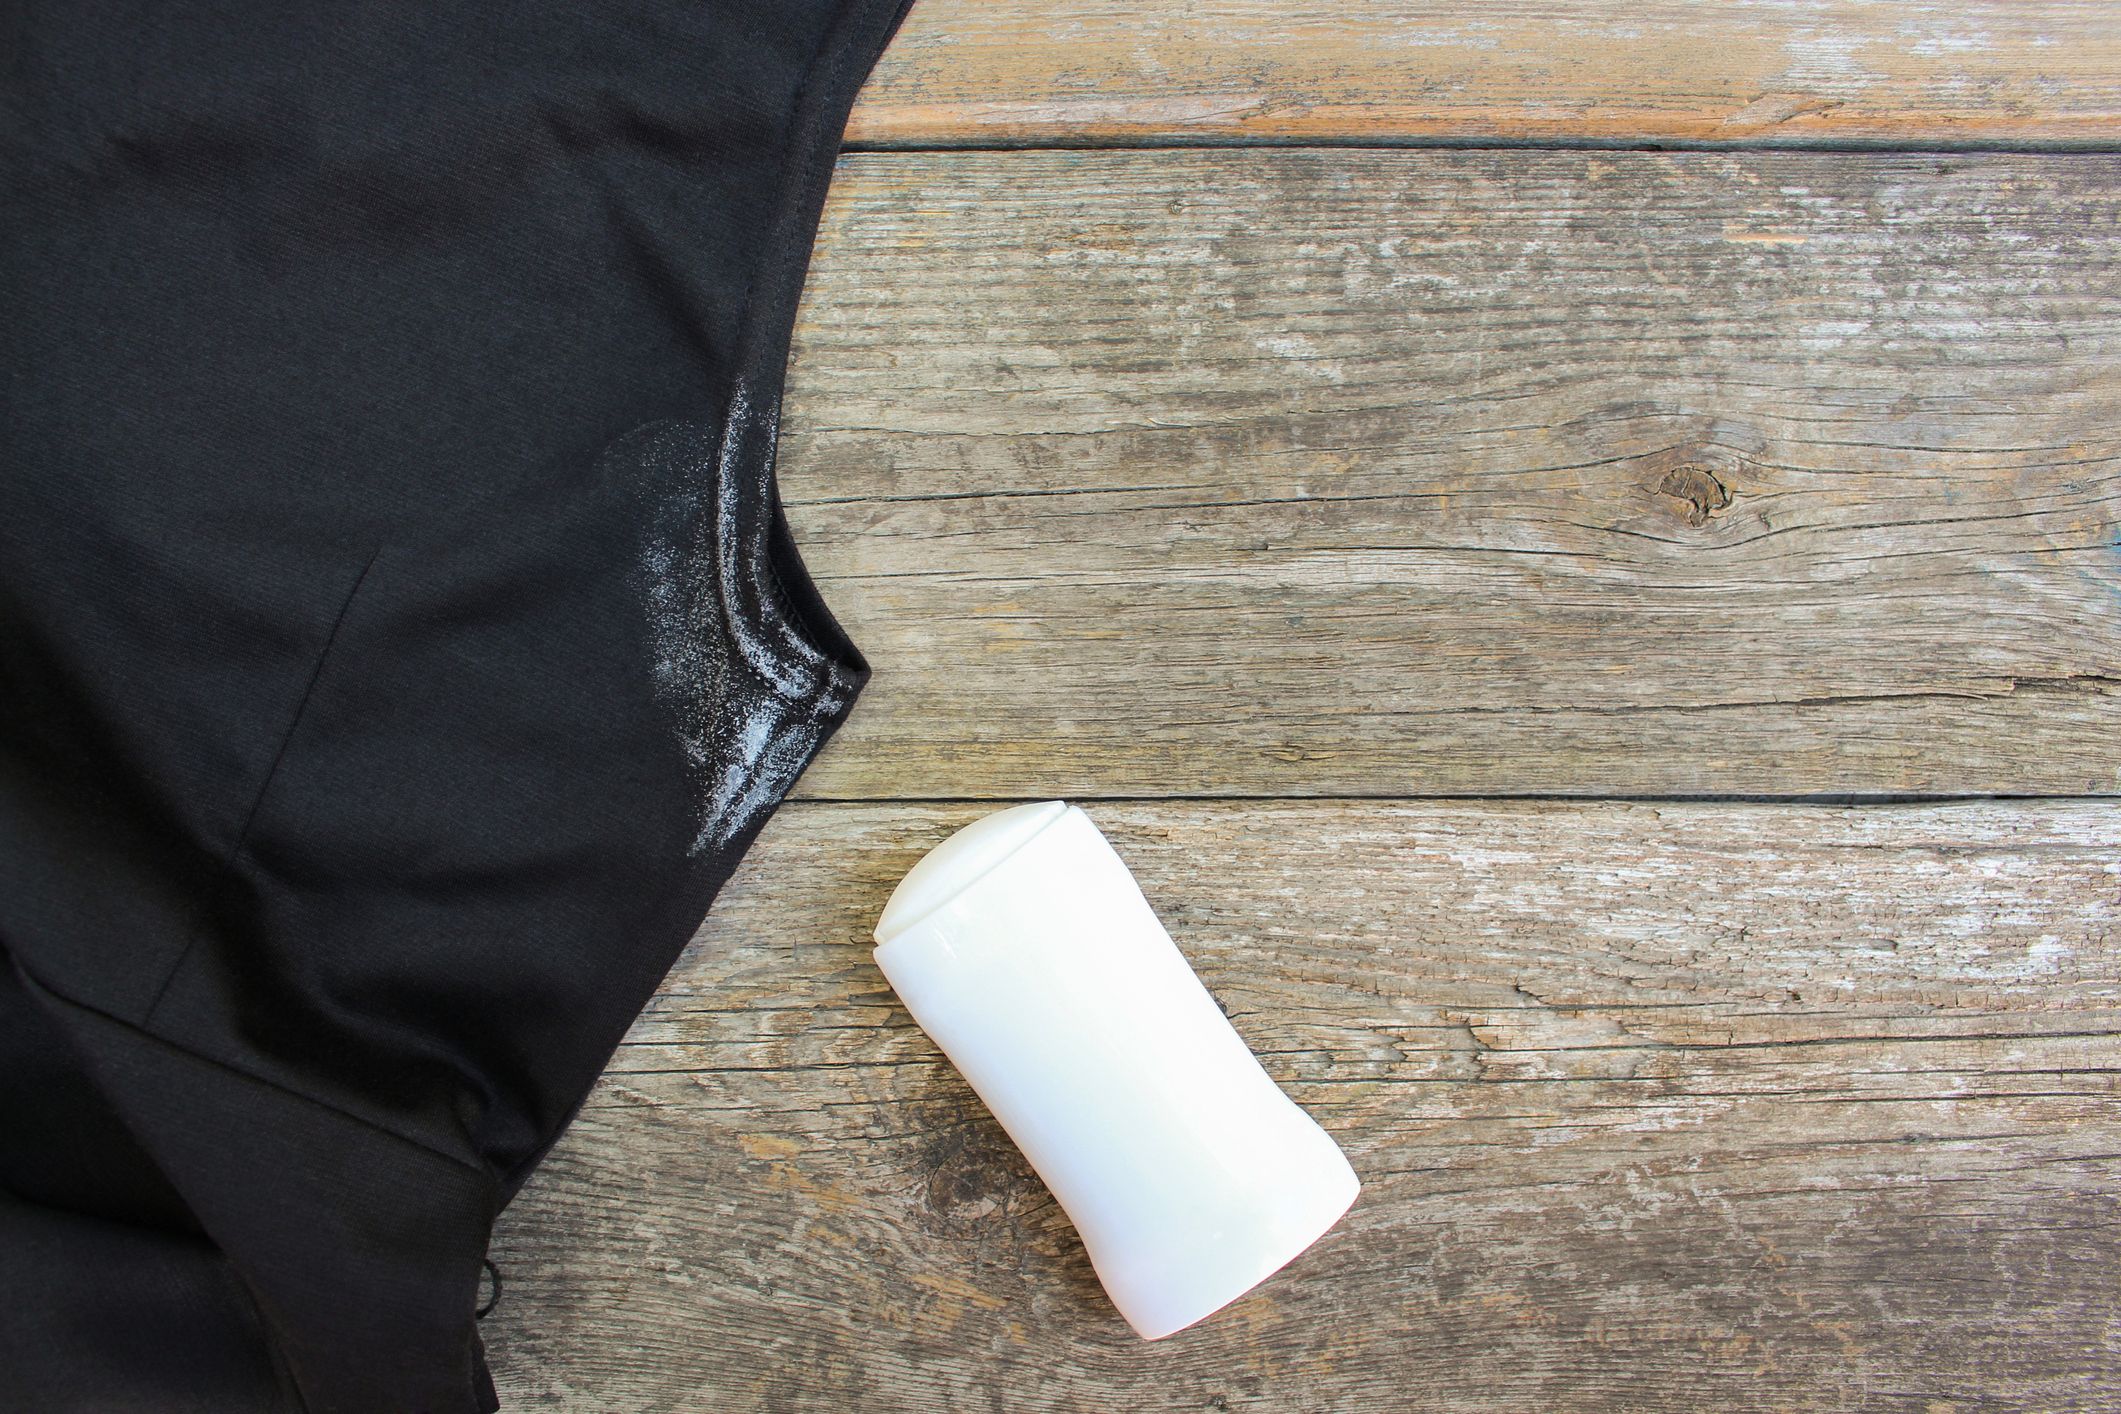 How remove antiperspirant deodorant stains